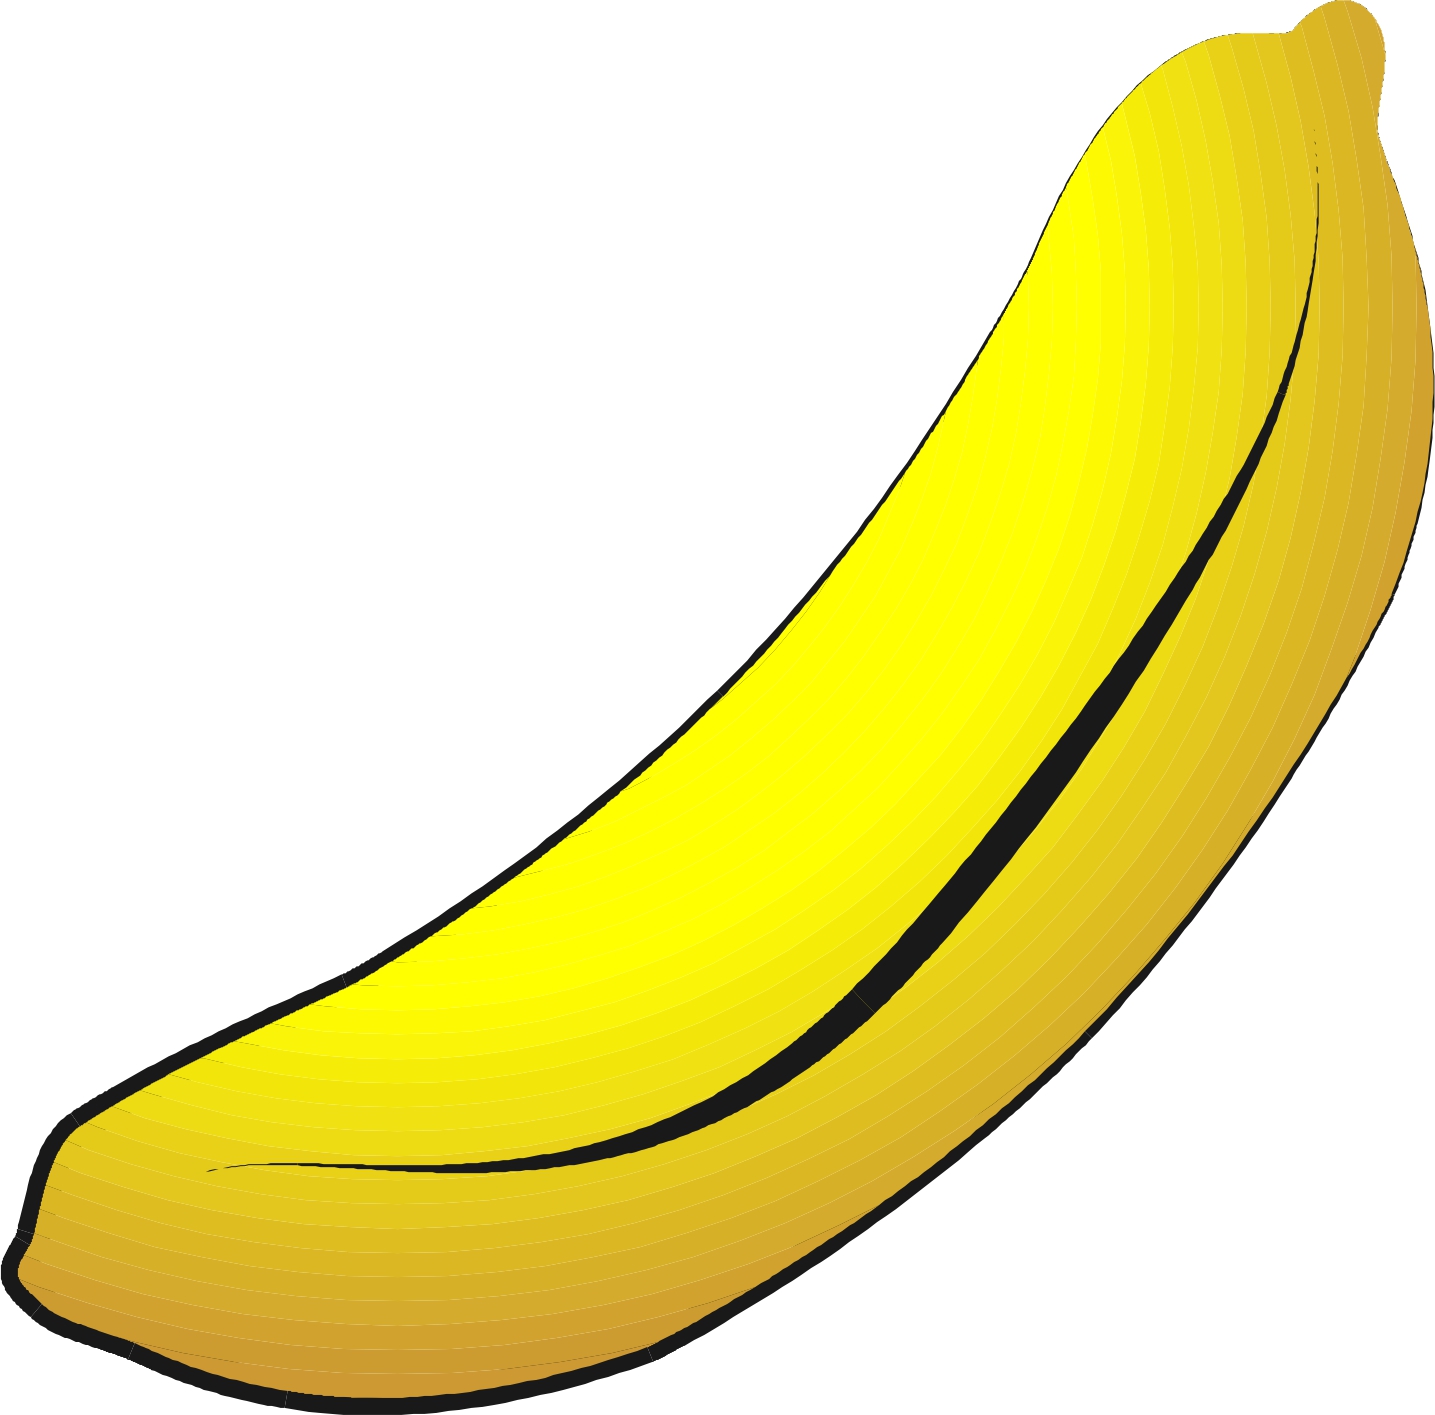 Banana Cartoon Picture Free Download Clip Art Free Clip Art